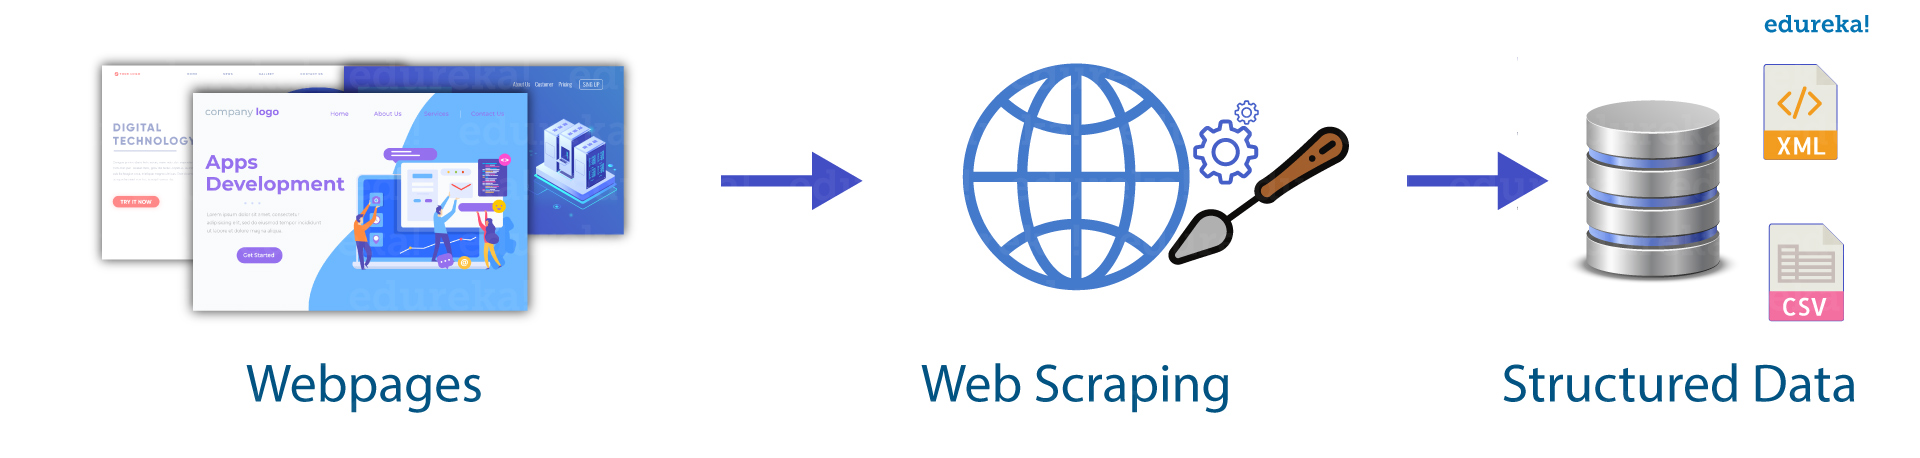 Web scraping software